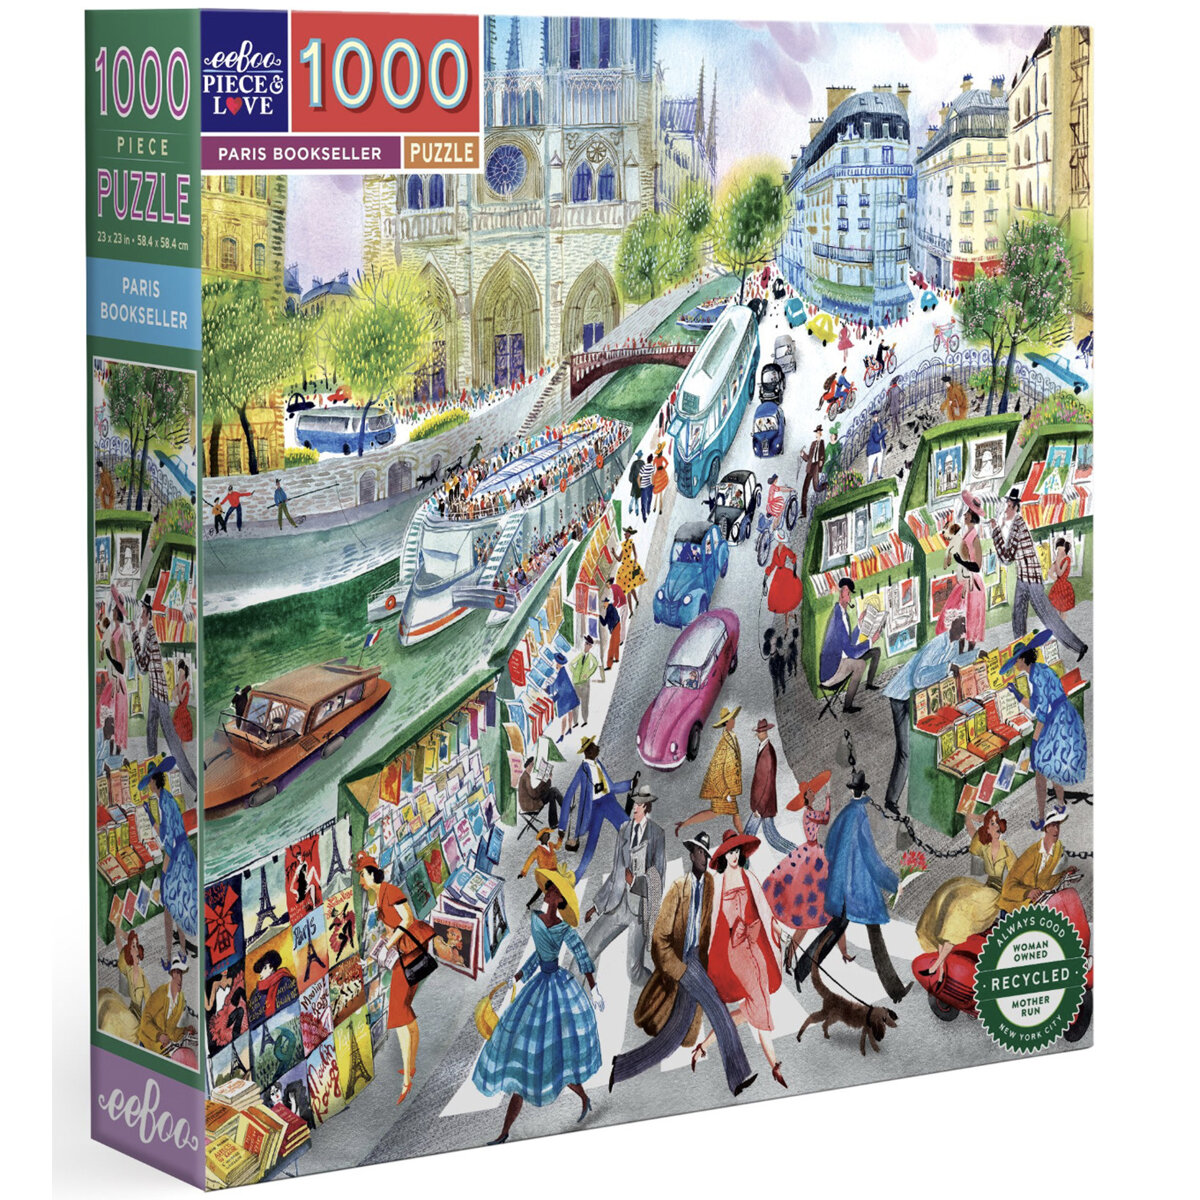 EeBoo Paris Bookseller 1000 Piece Puzzle *NEW!*